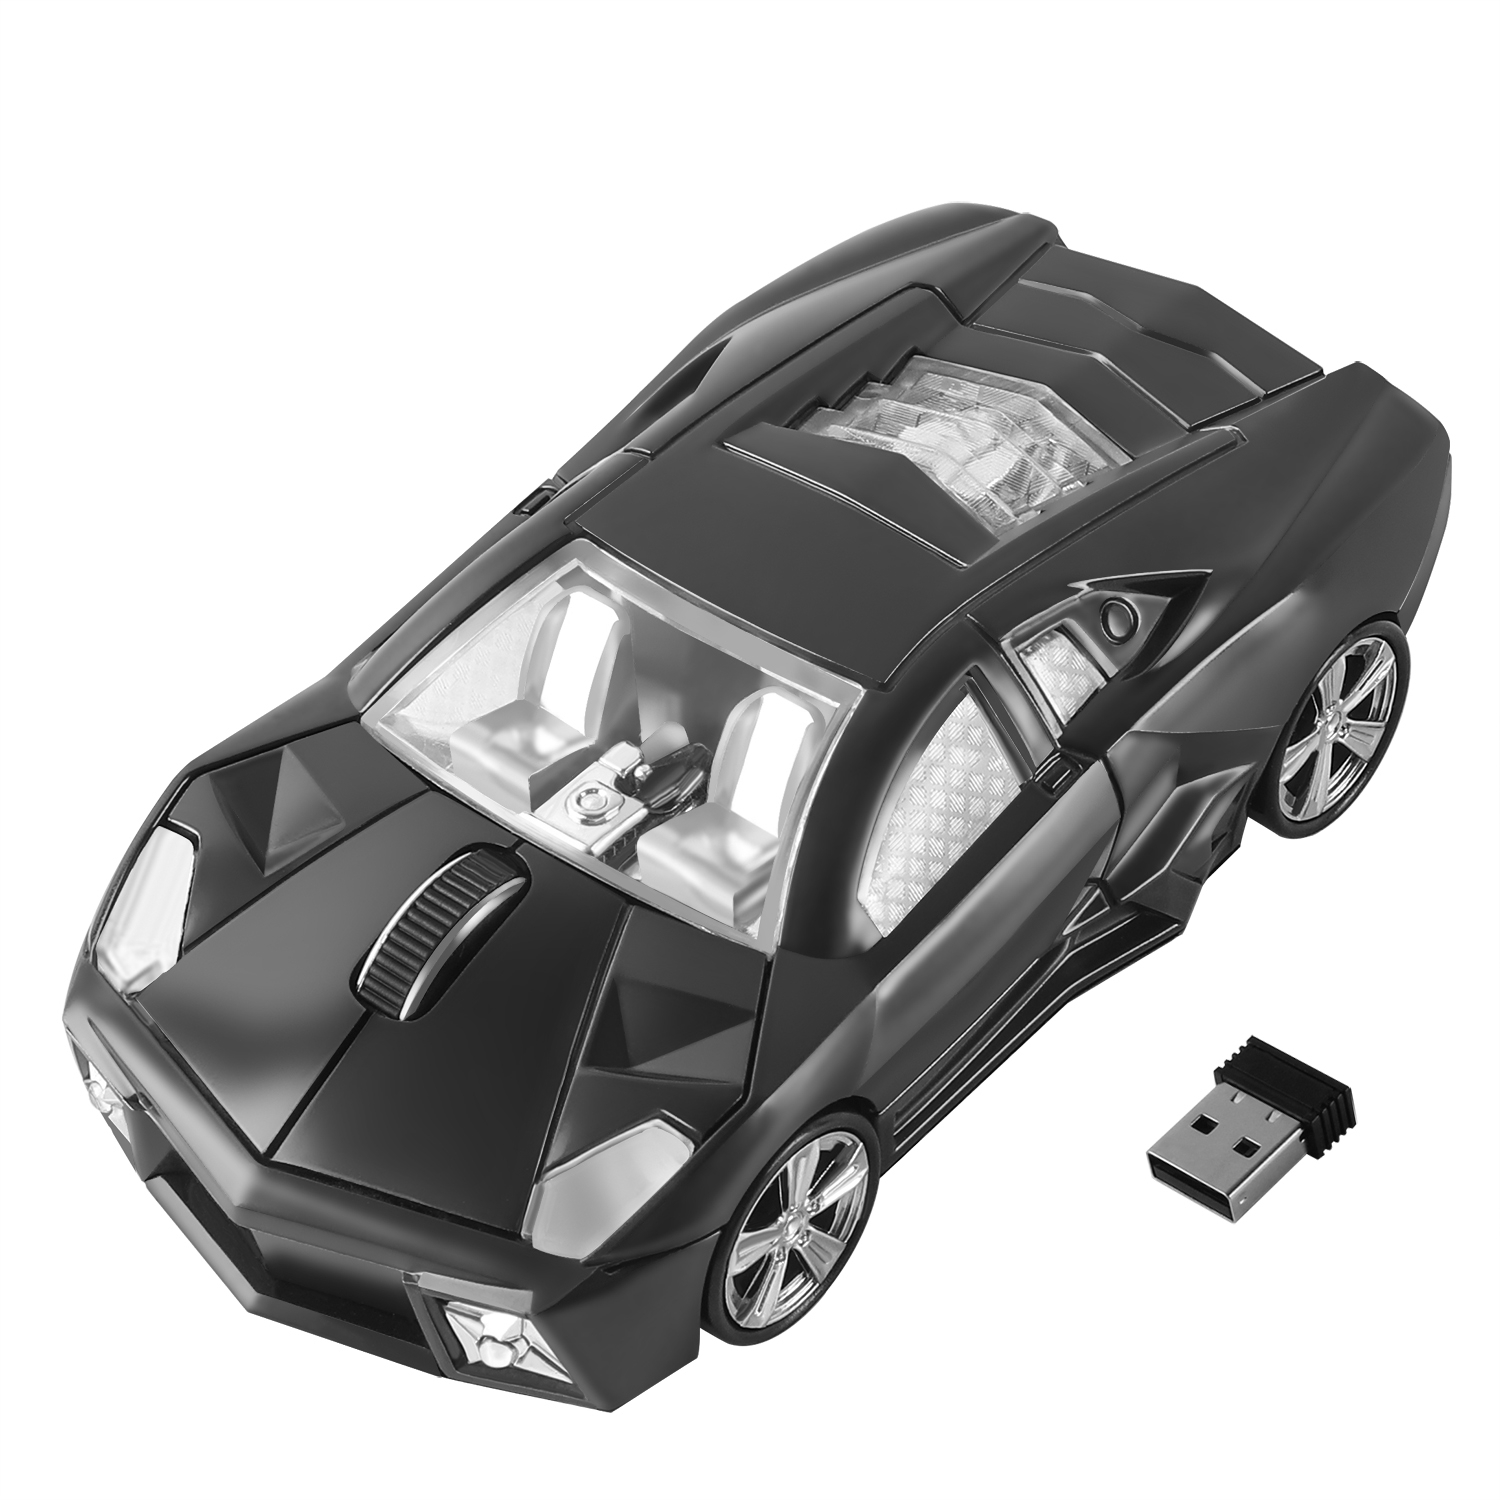 2-4G-Wireless-Mouse-Ergonomic-Sports-Car-Design-Gaming-Mause-1600-DPI-USB-Optical-Kids-Gift (9)